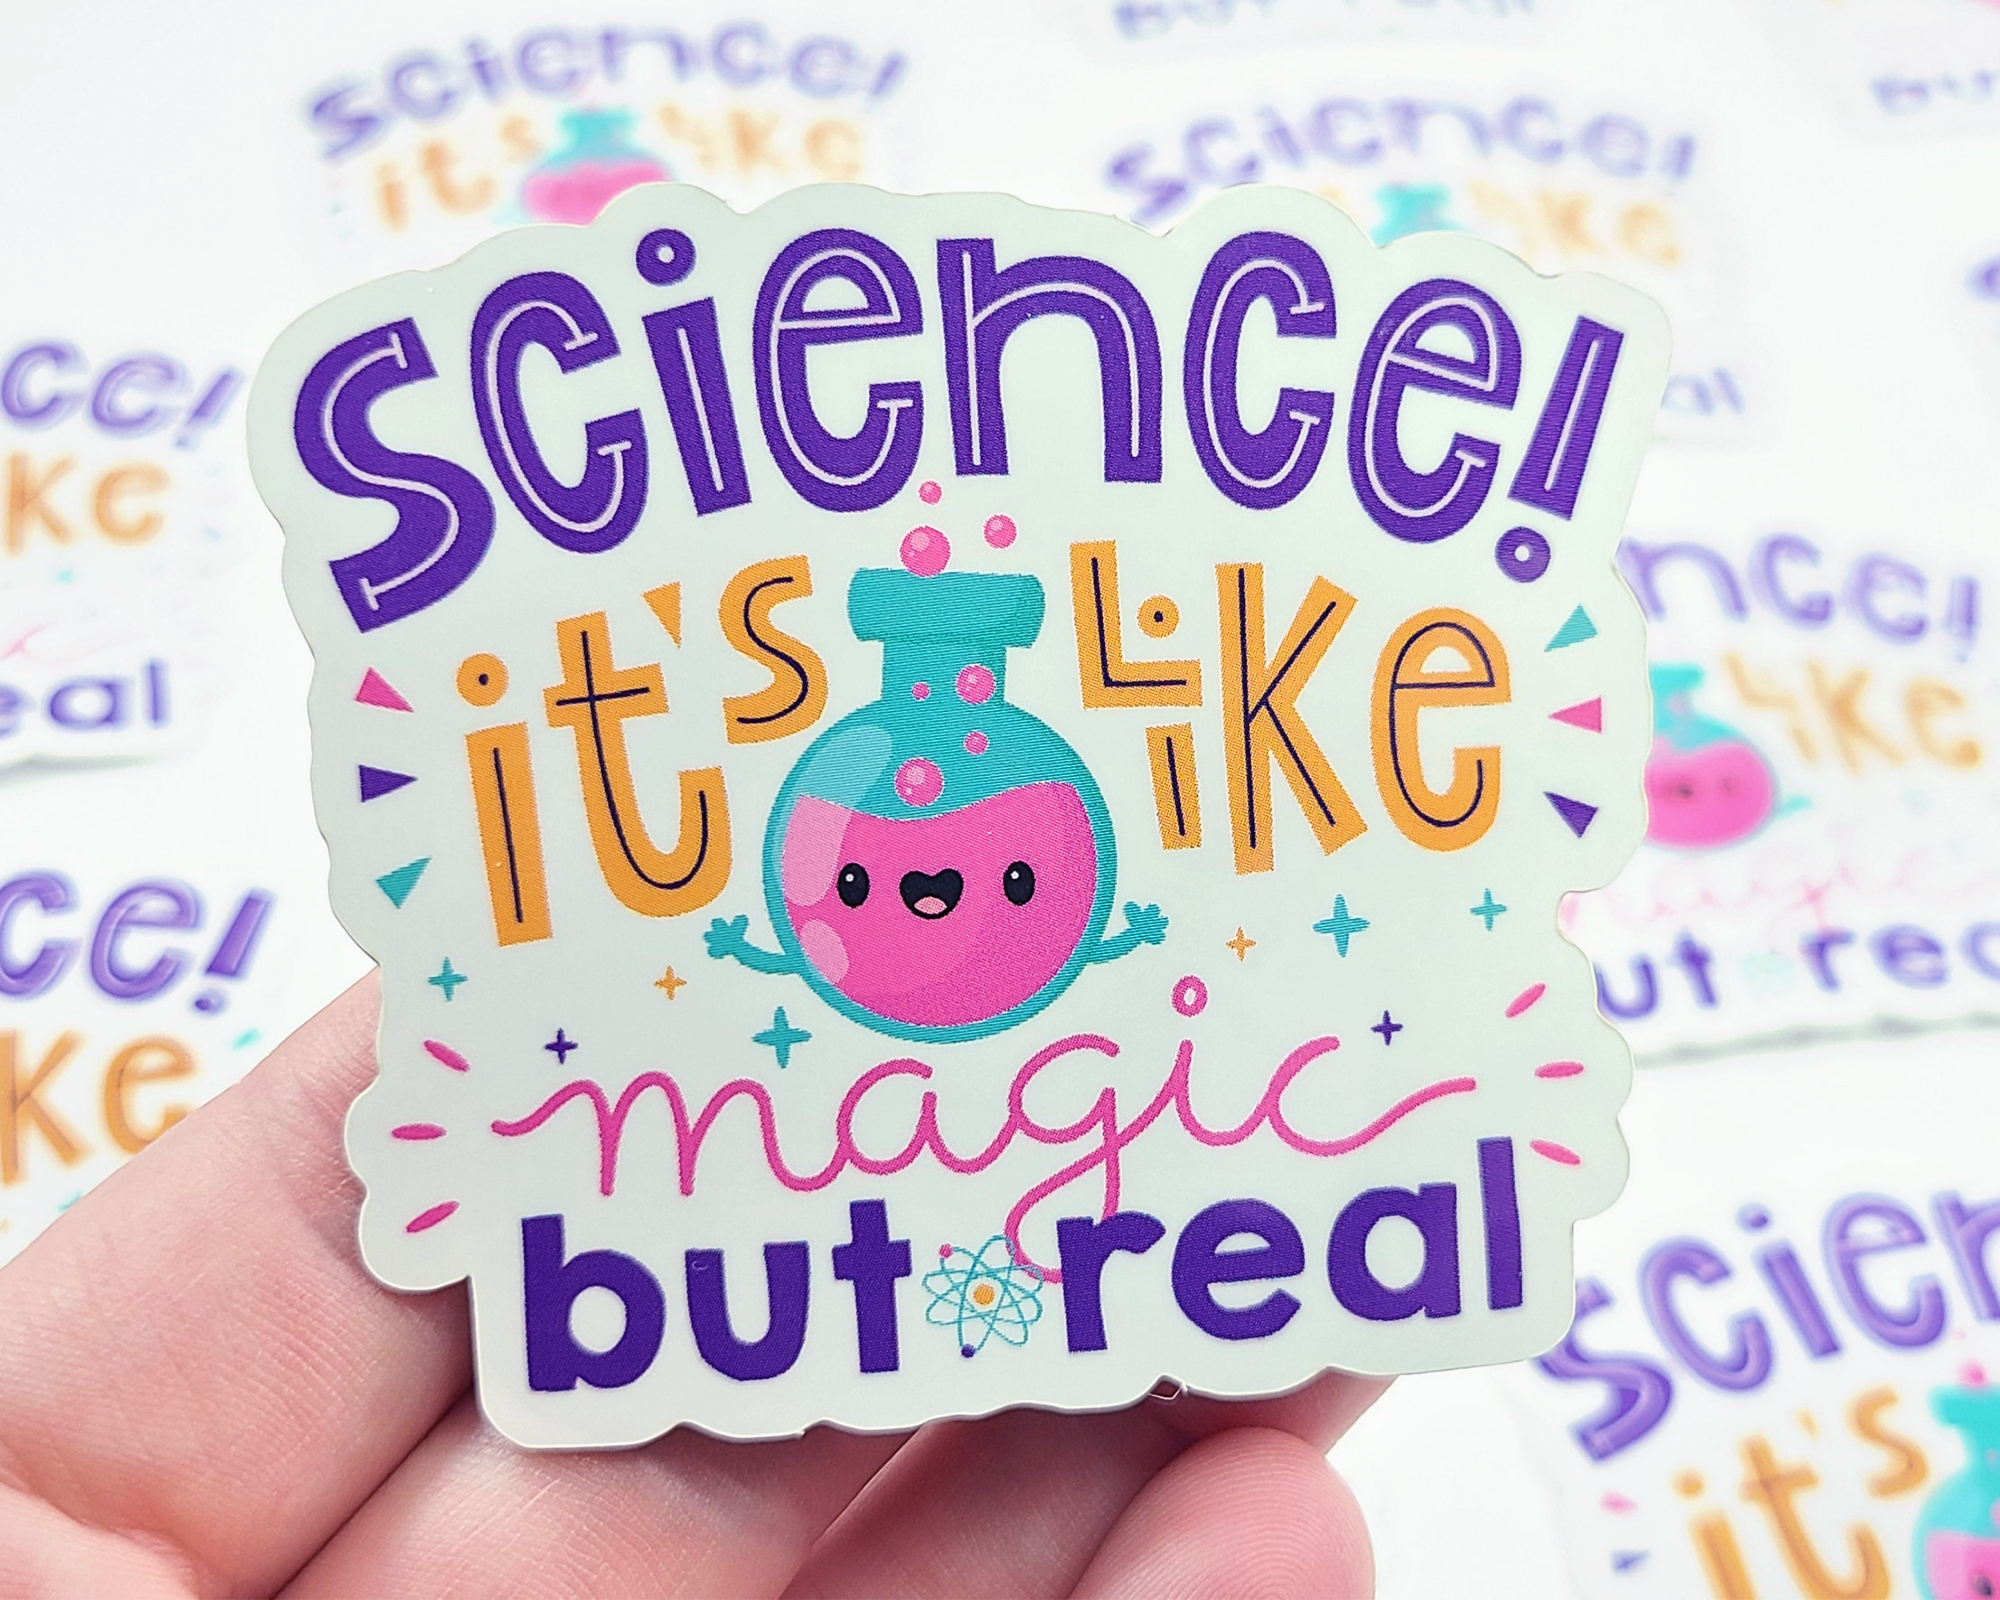 Science is Magic Sticker